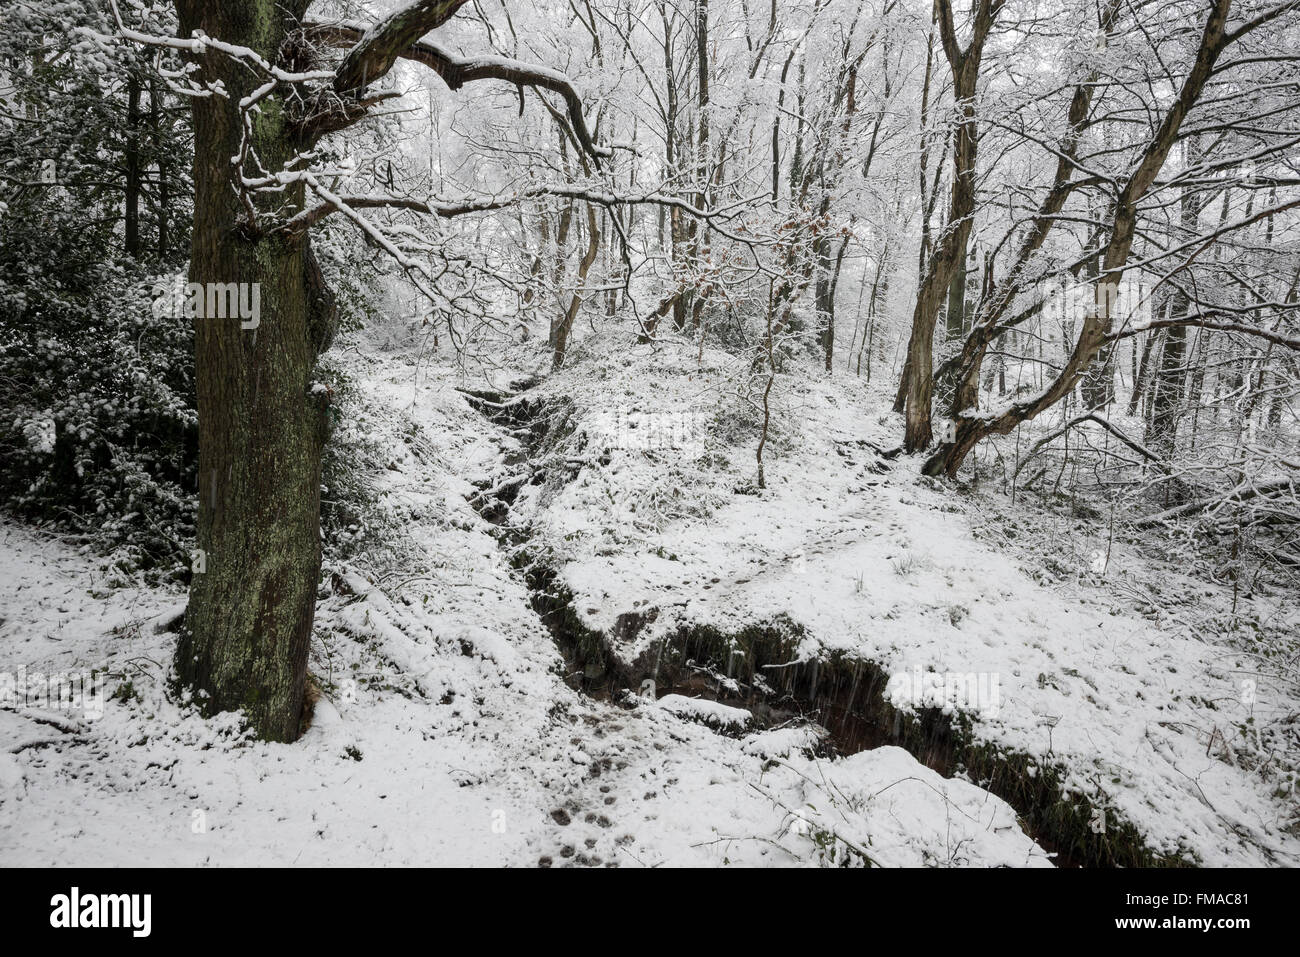 Stream running through a snowy English woodland. Oak tree beside the path. Stock Photo